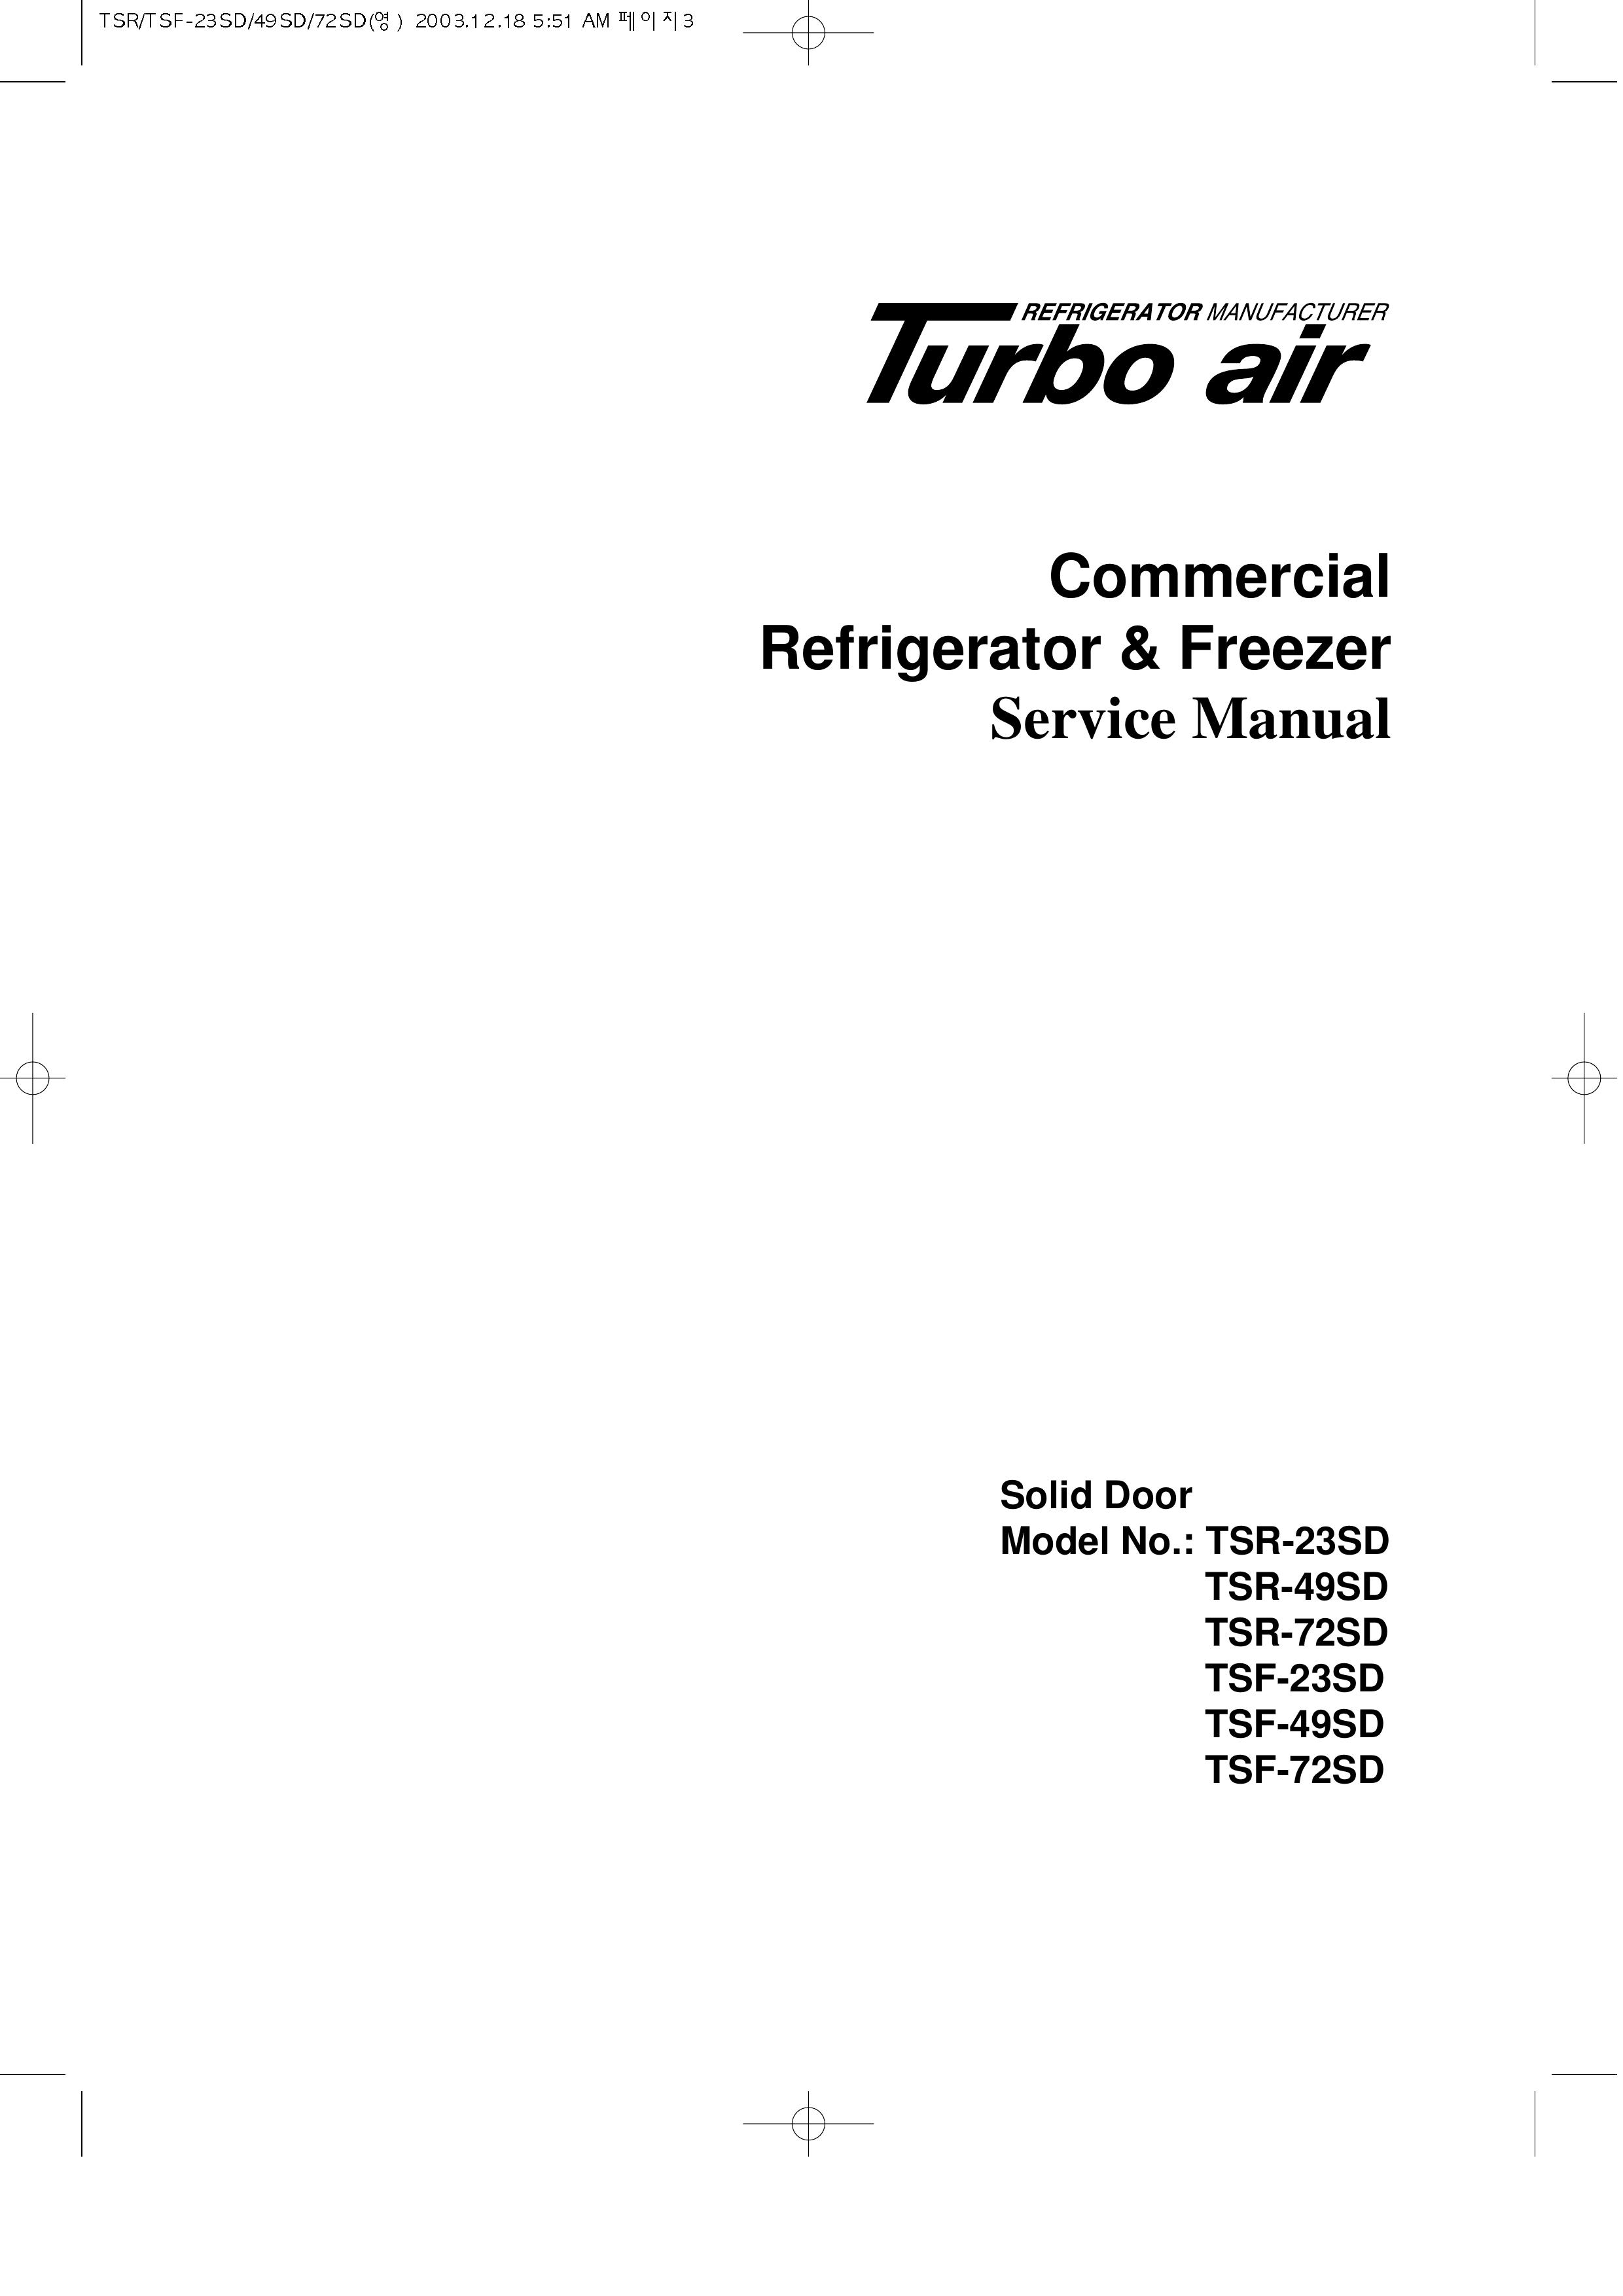 Turbo Air TSF-49SD Refrigerator User Manual